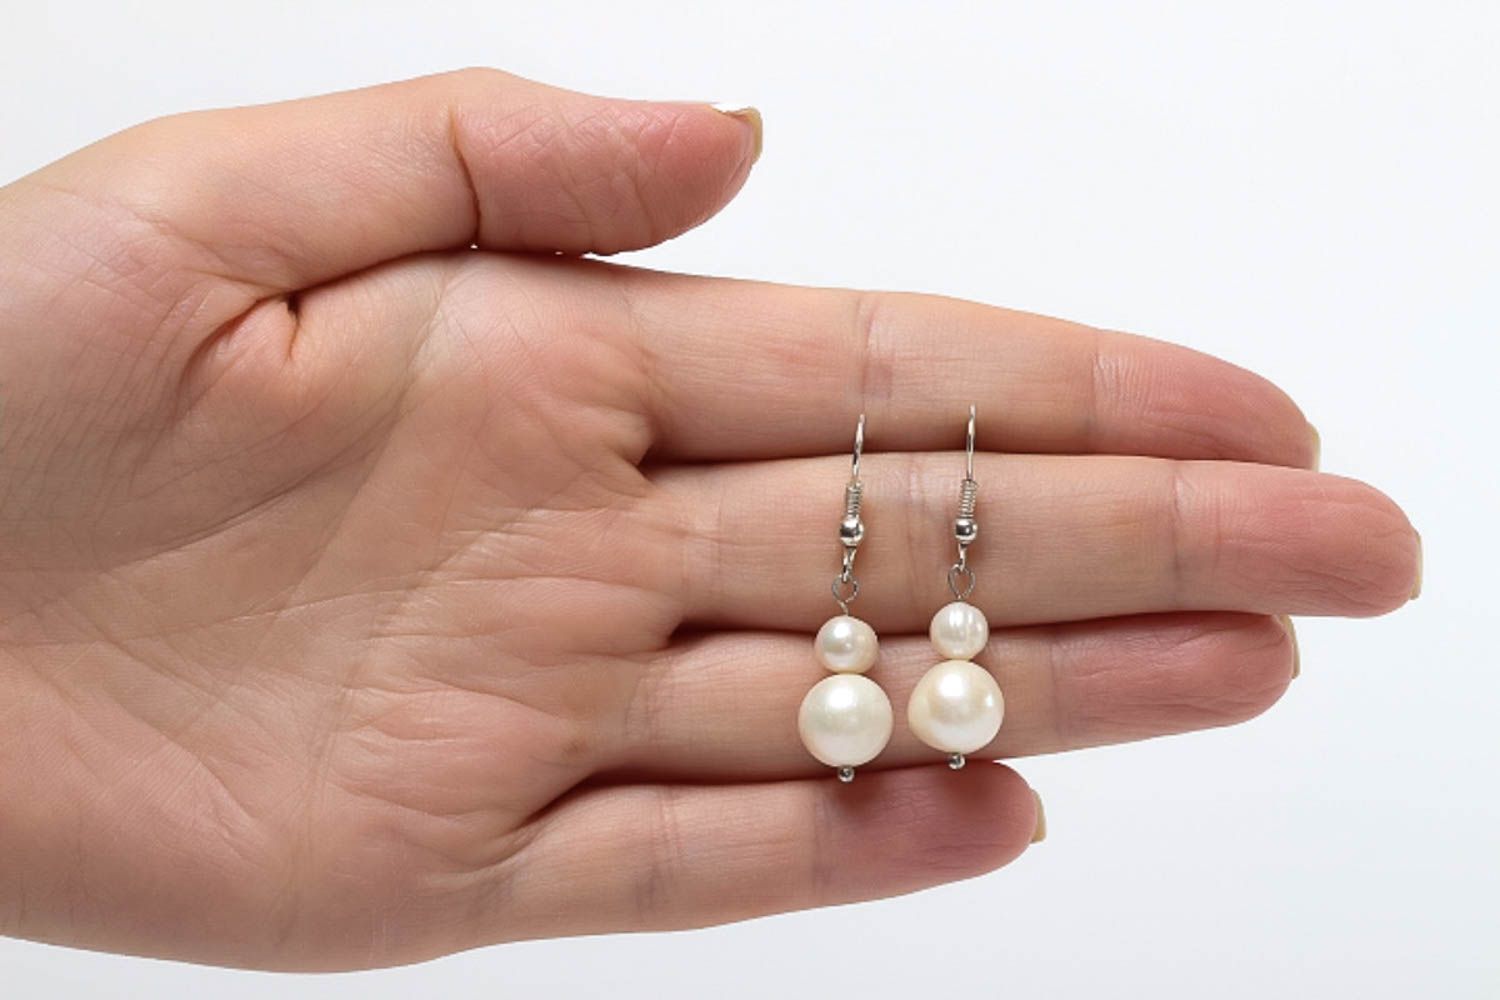 Pearl earrings handmade jewelry long earrings unique jewelry gifts for girls photo 5